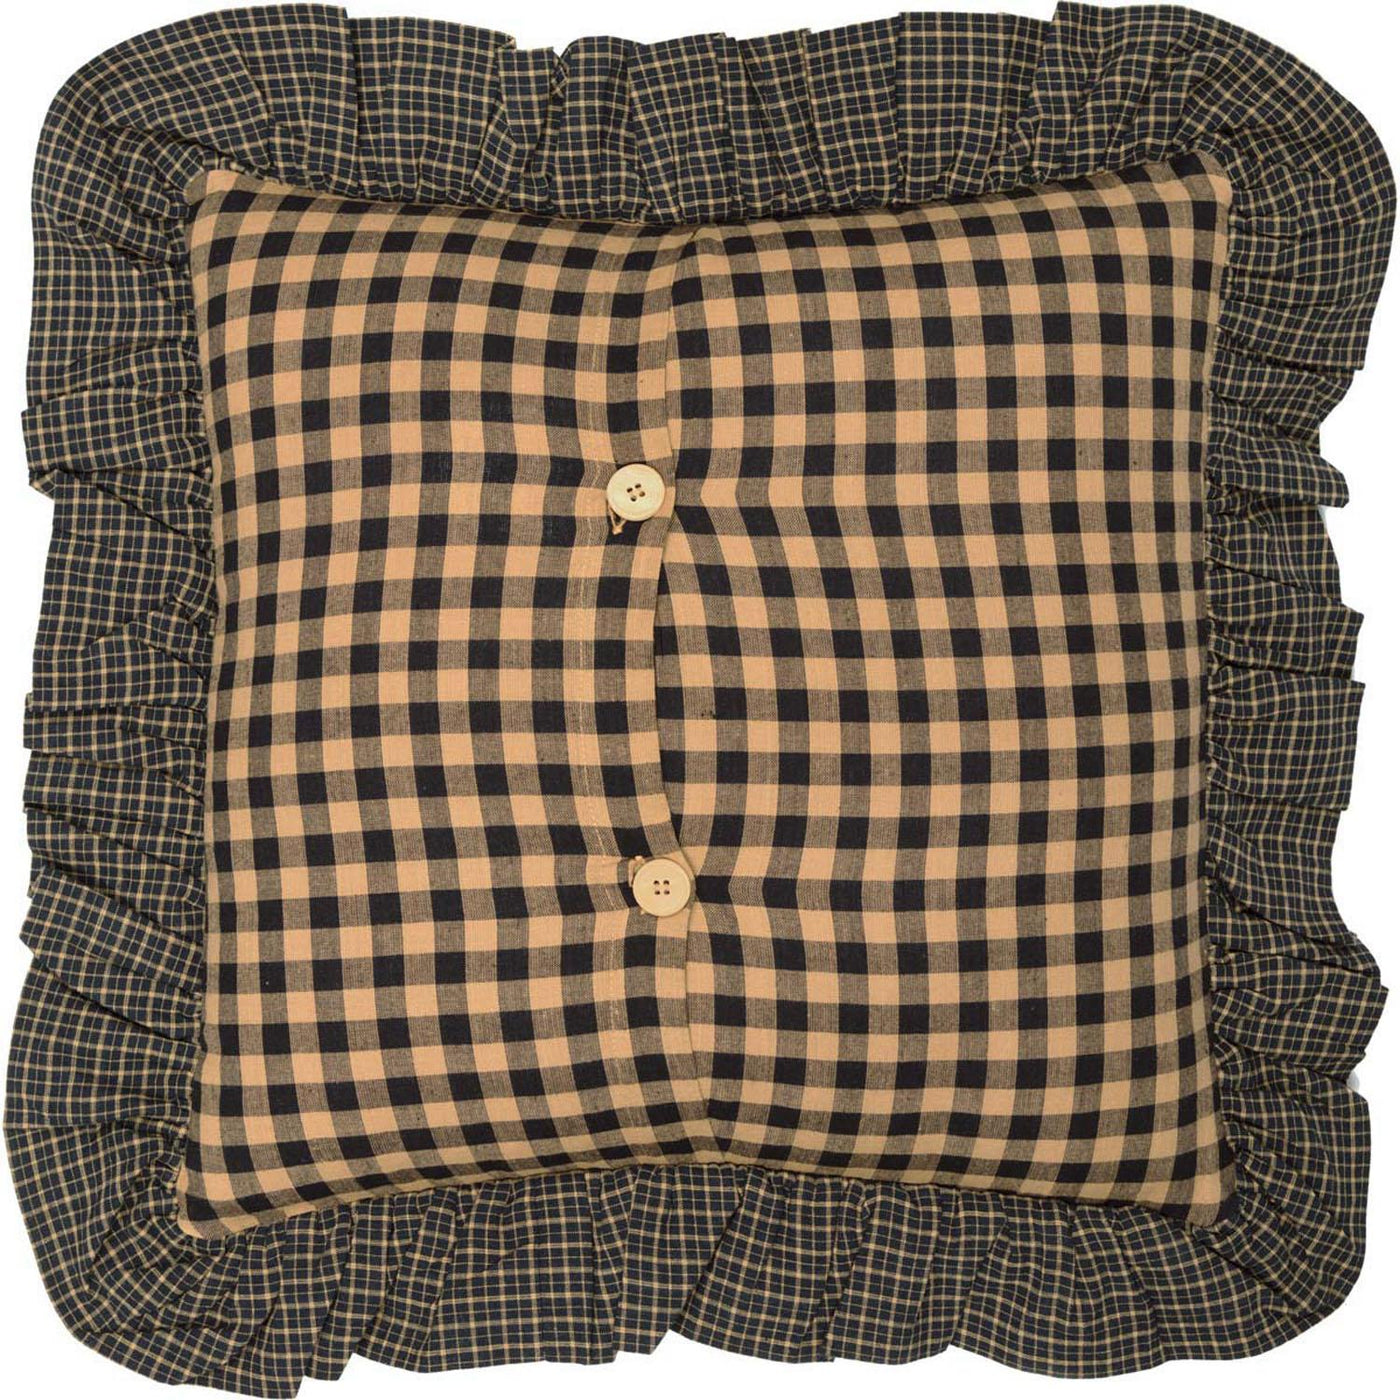 Wooddruff 18 x 18 Pillow - Natural/Burgundy